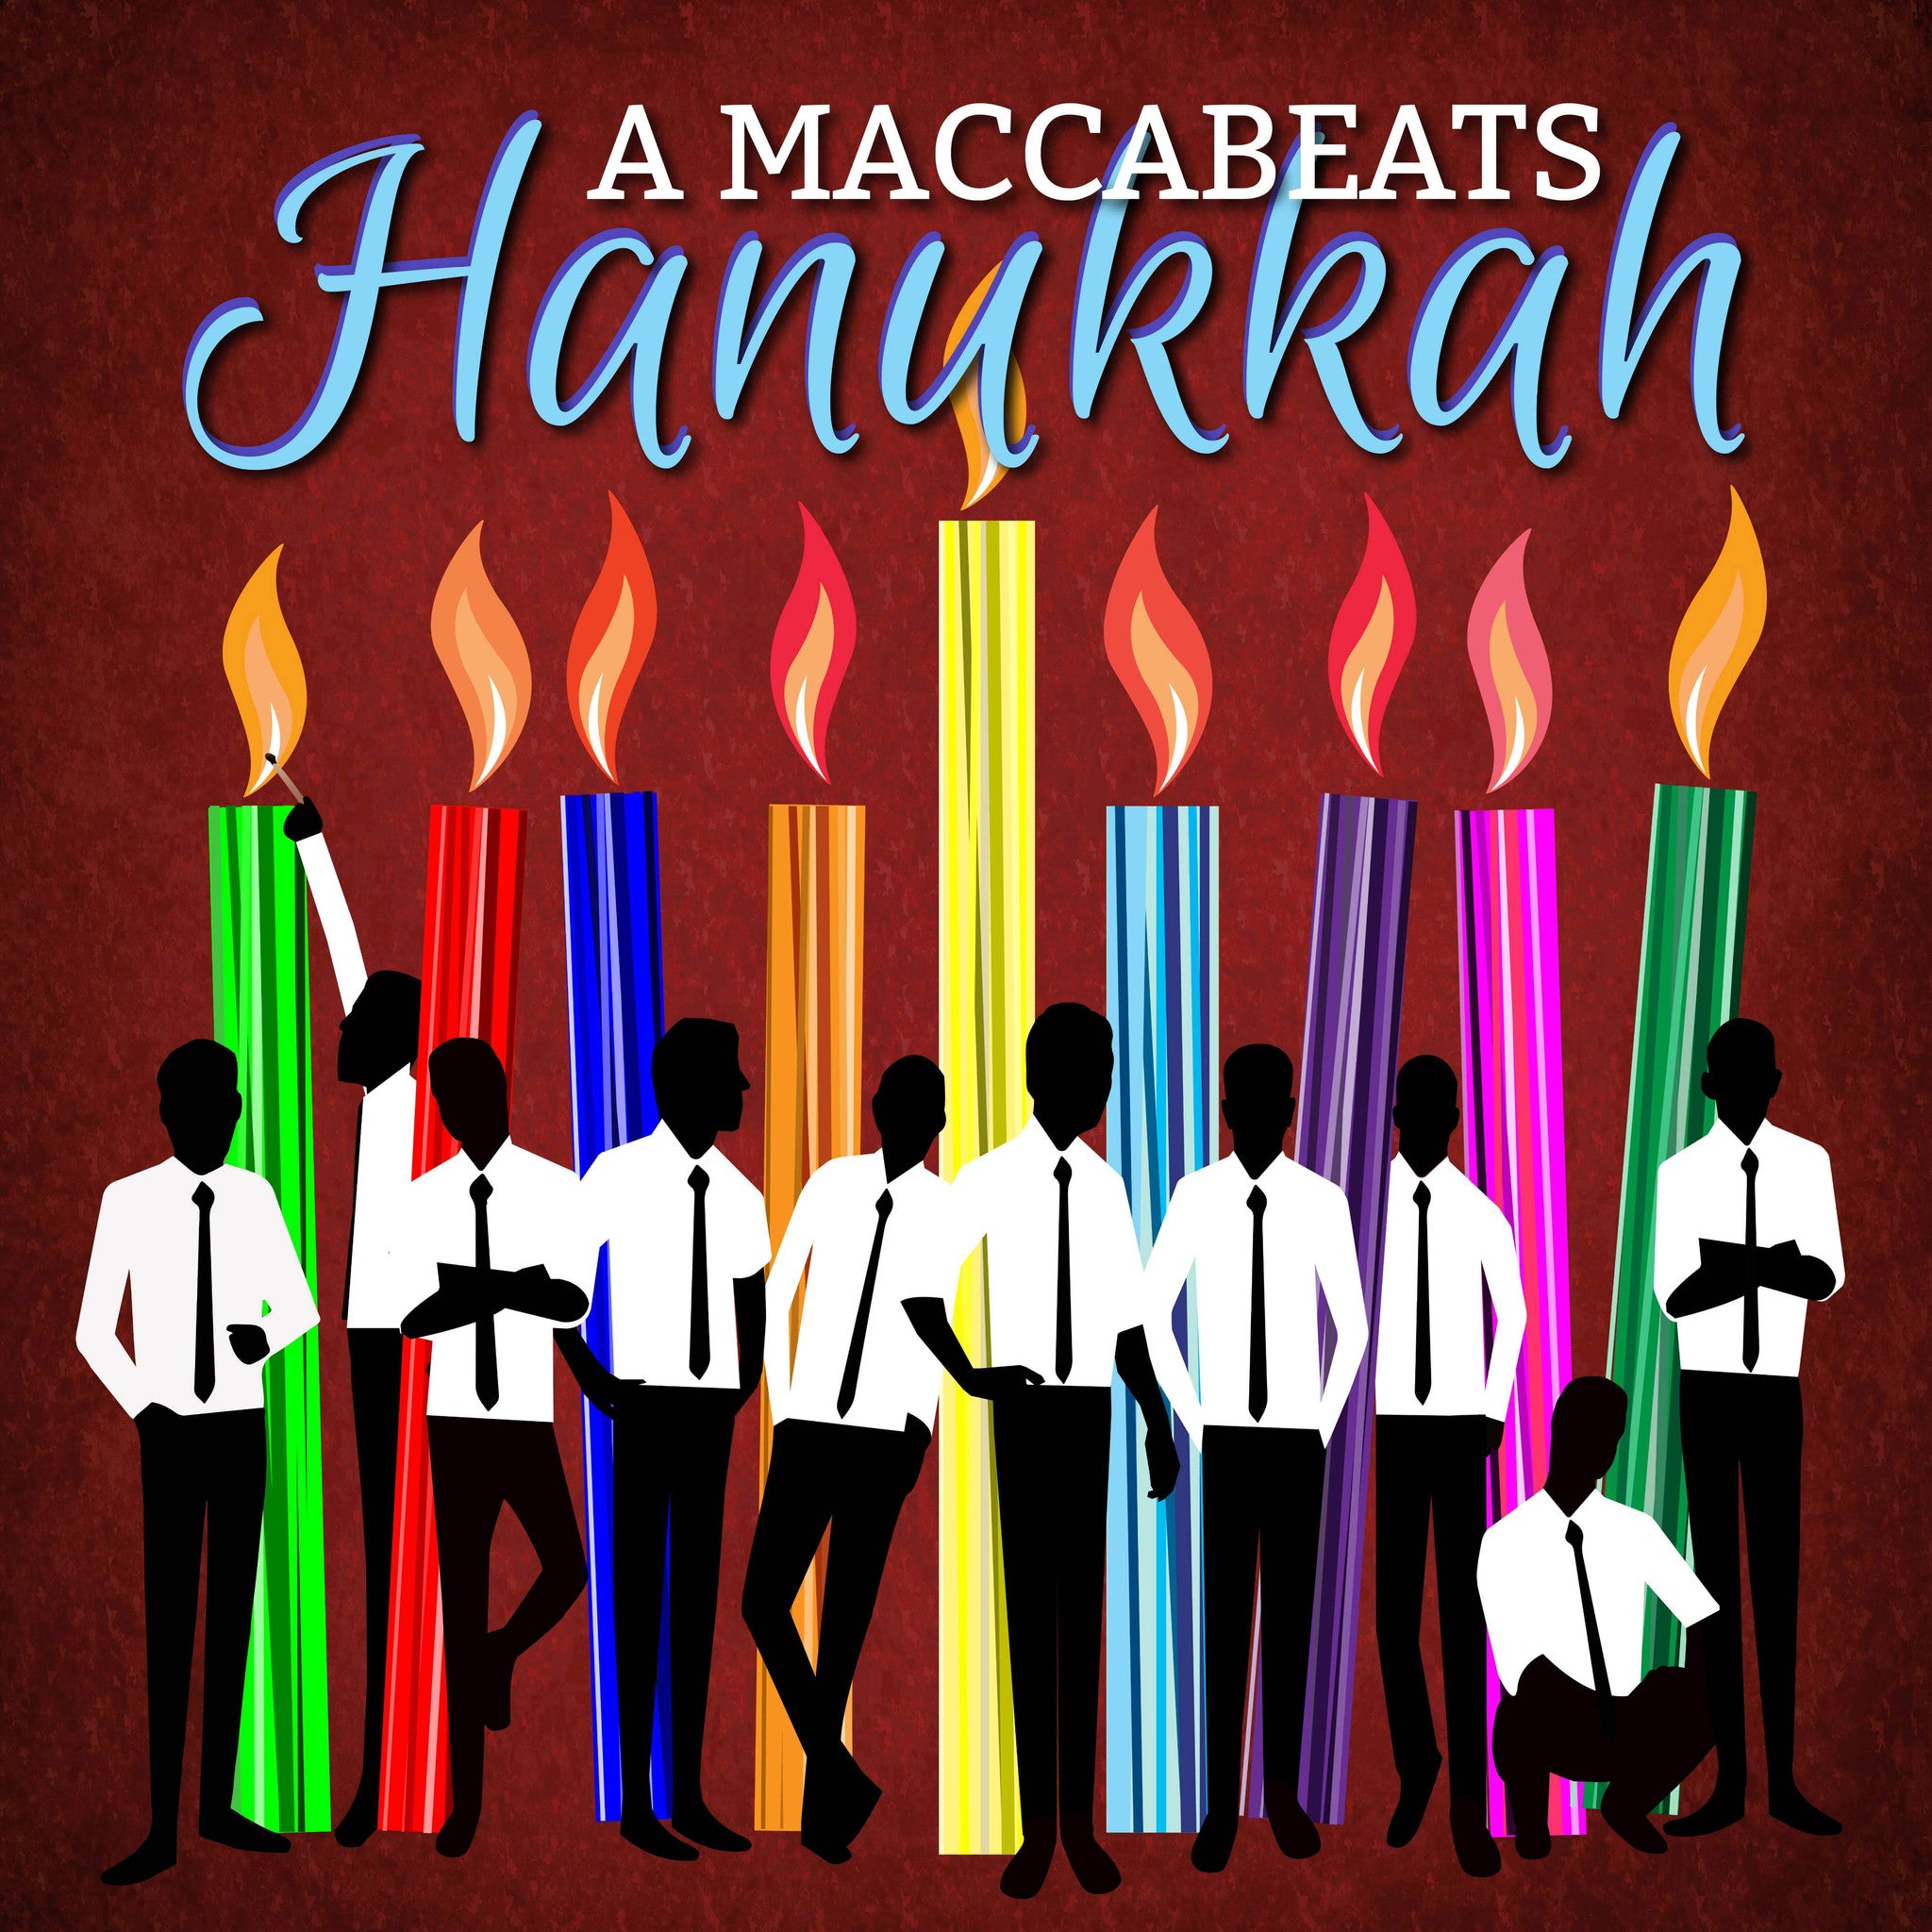 A maccabeats Hanukah